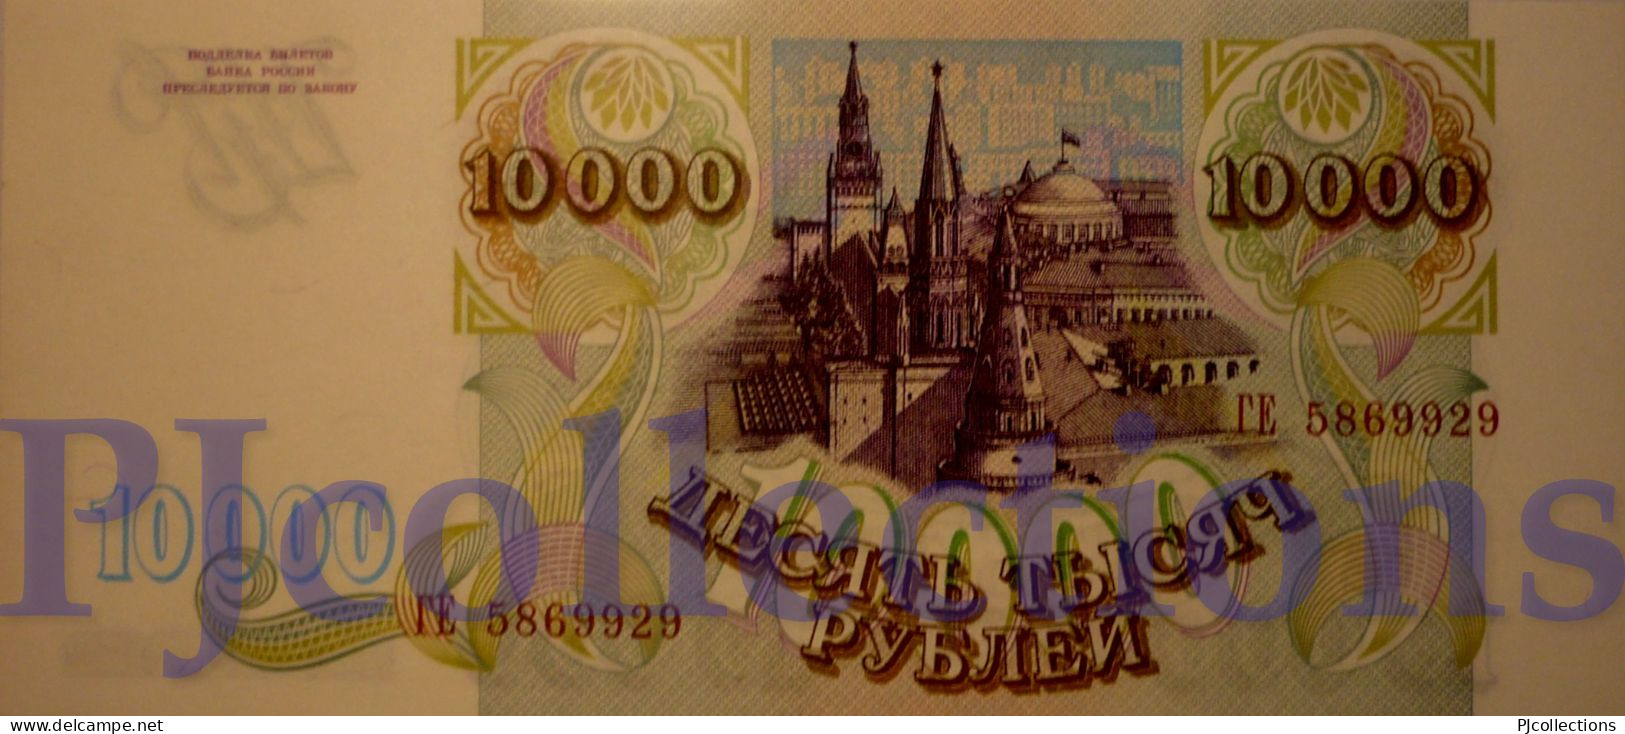 RUSSIA 10000 RUBLES 1993 PICK 259a UNC - Russie